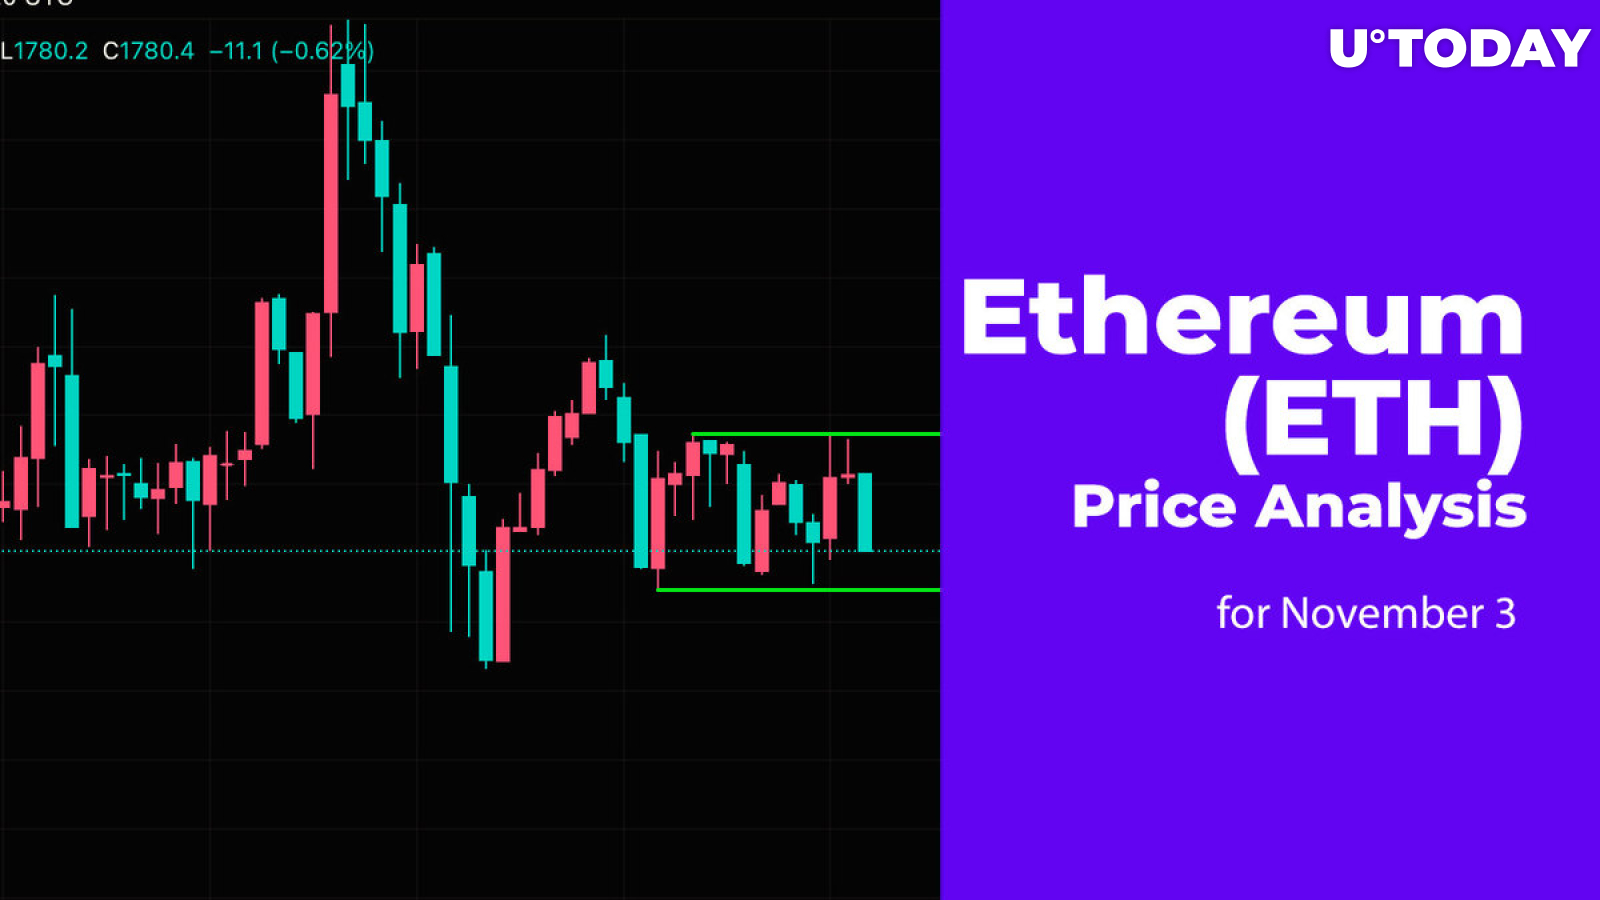 Ethereum (ETH) Price Analysis for November 3